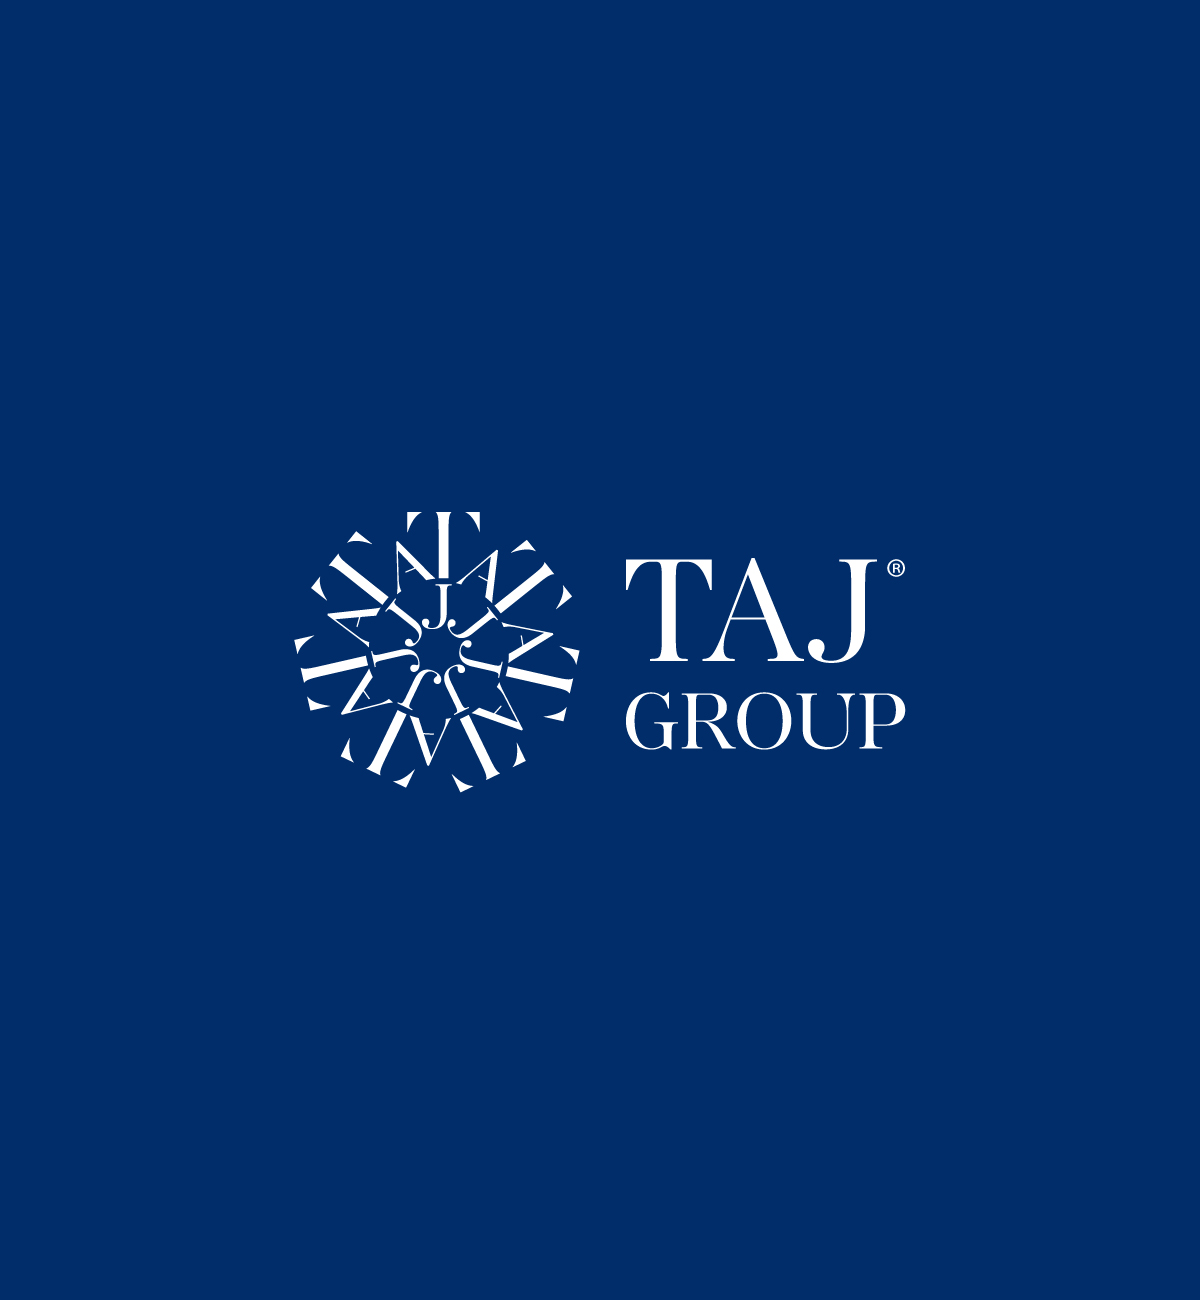 Aimstyle portfolio | Taj Group's Revitalization - Aimstyle's Rebranding Expertise